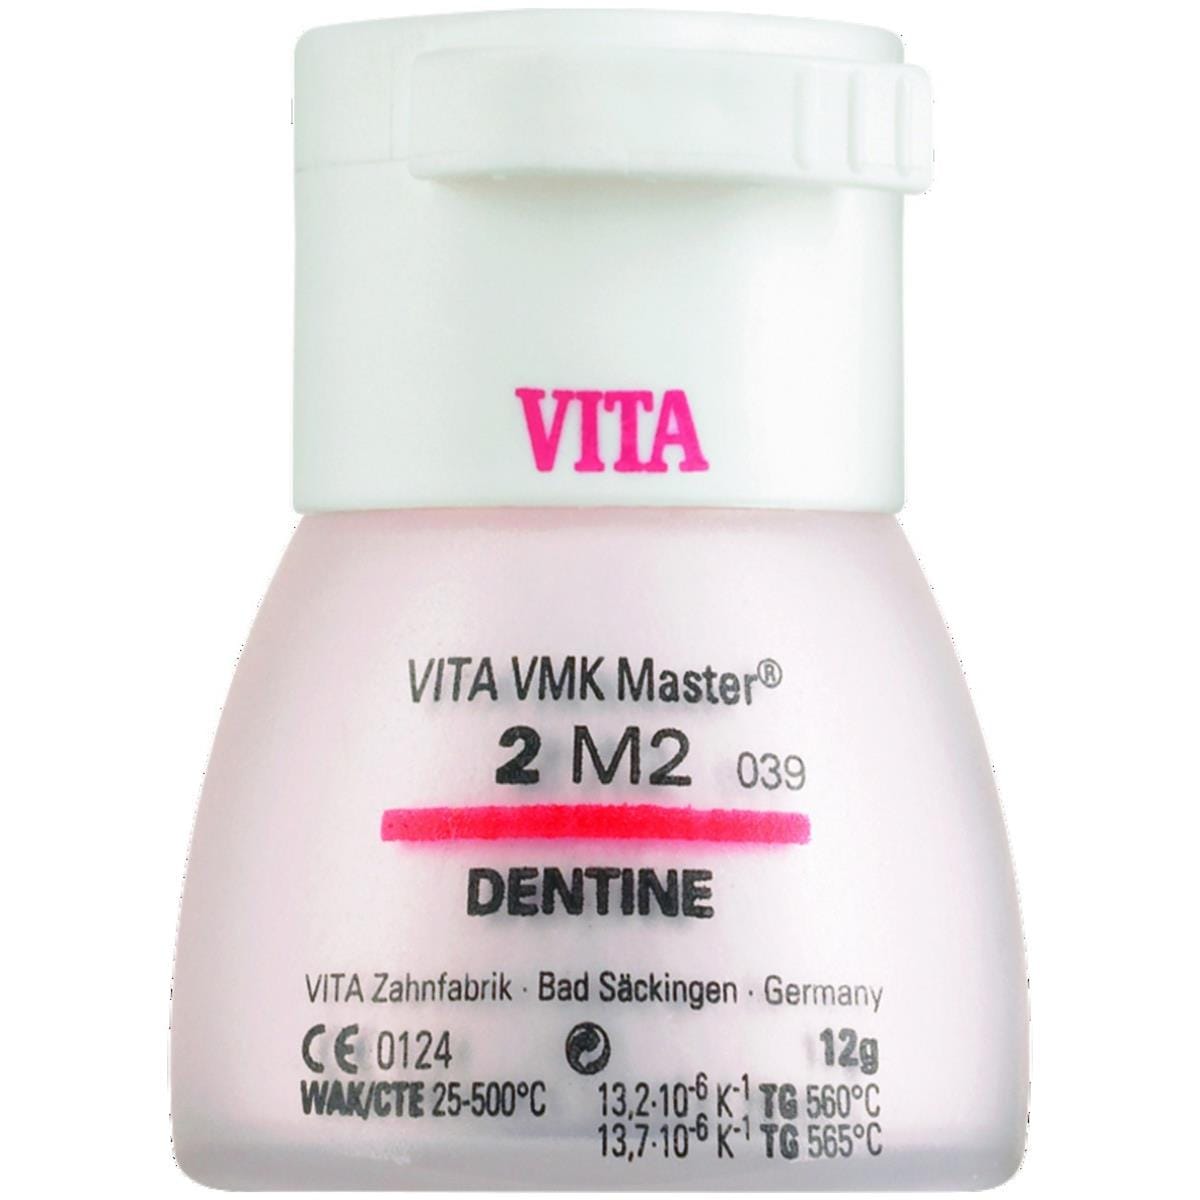 VMK Master VITA - Dentine - 3L2,5 - Le flacon de 12 g